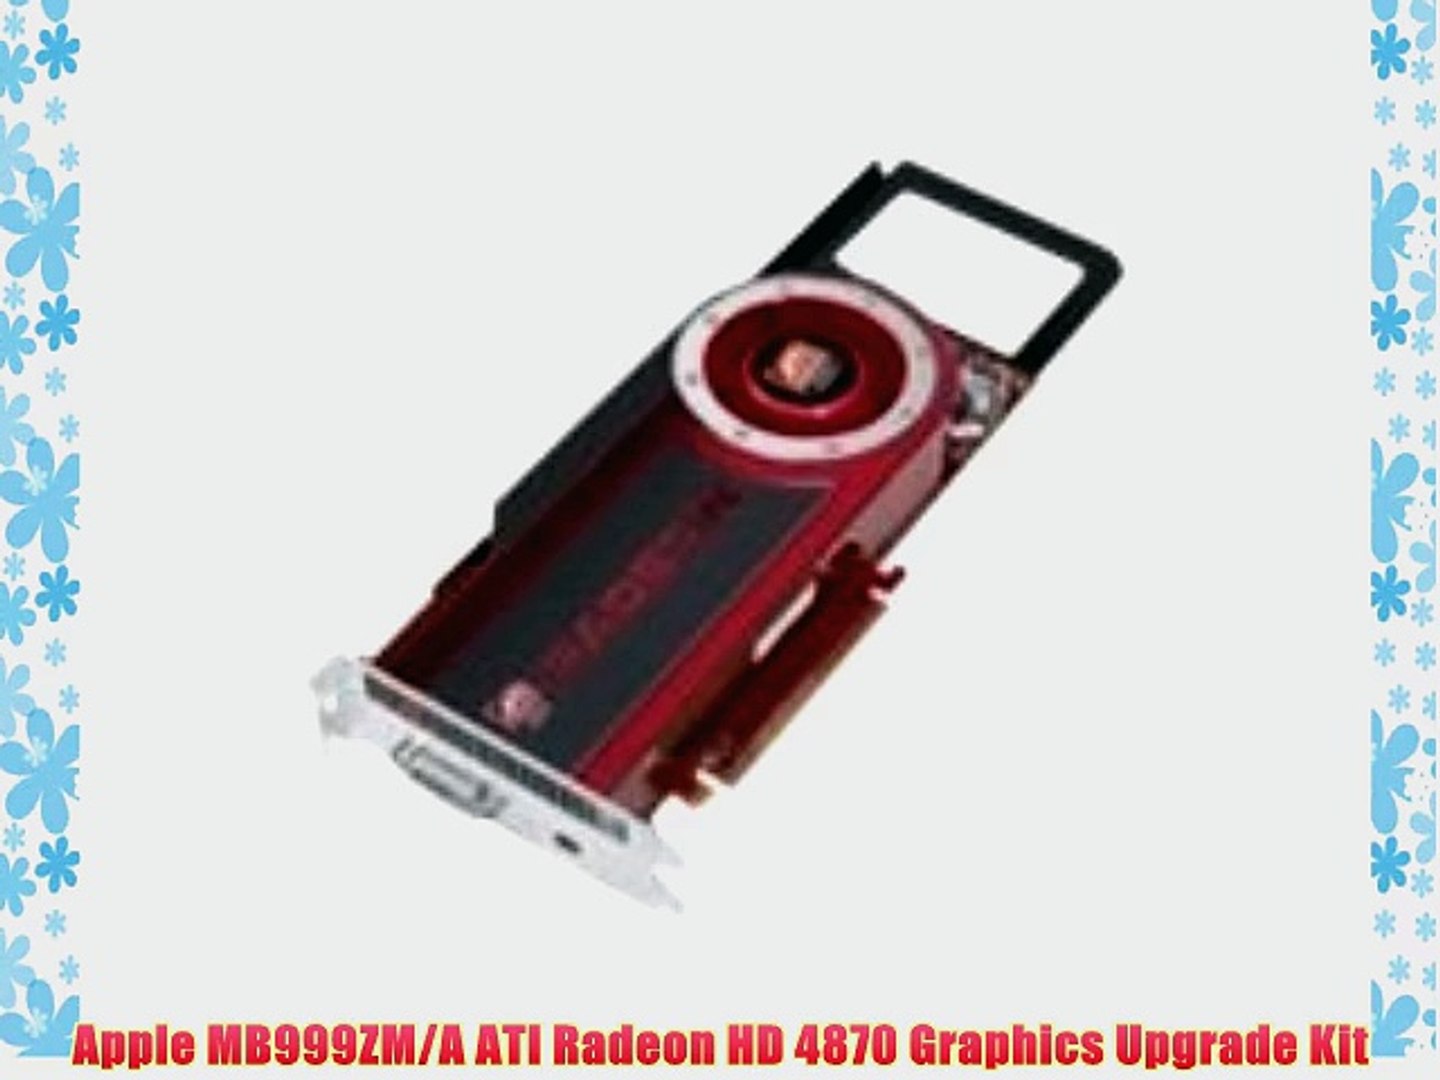 Ati radeon hd 4870 graphics upgrade kit for apple mac pro